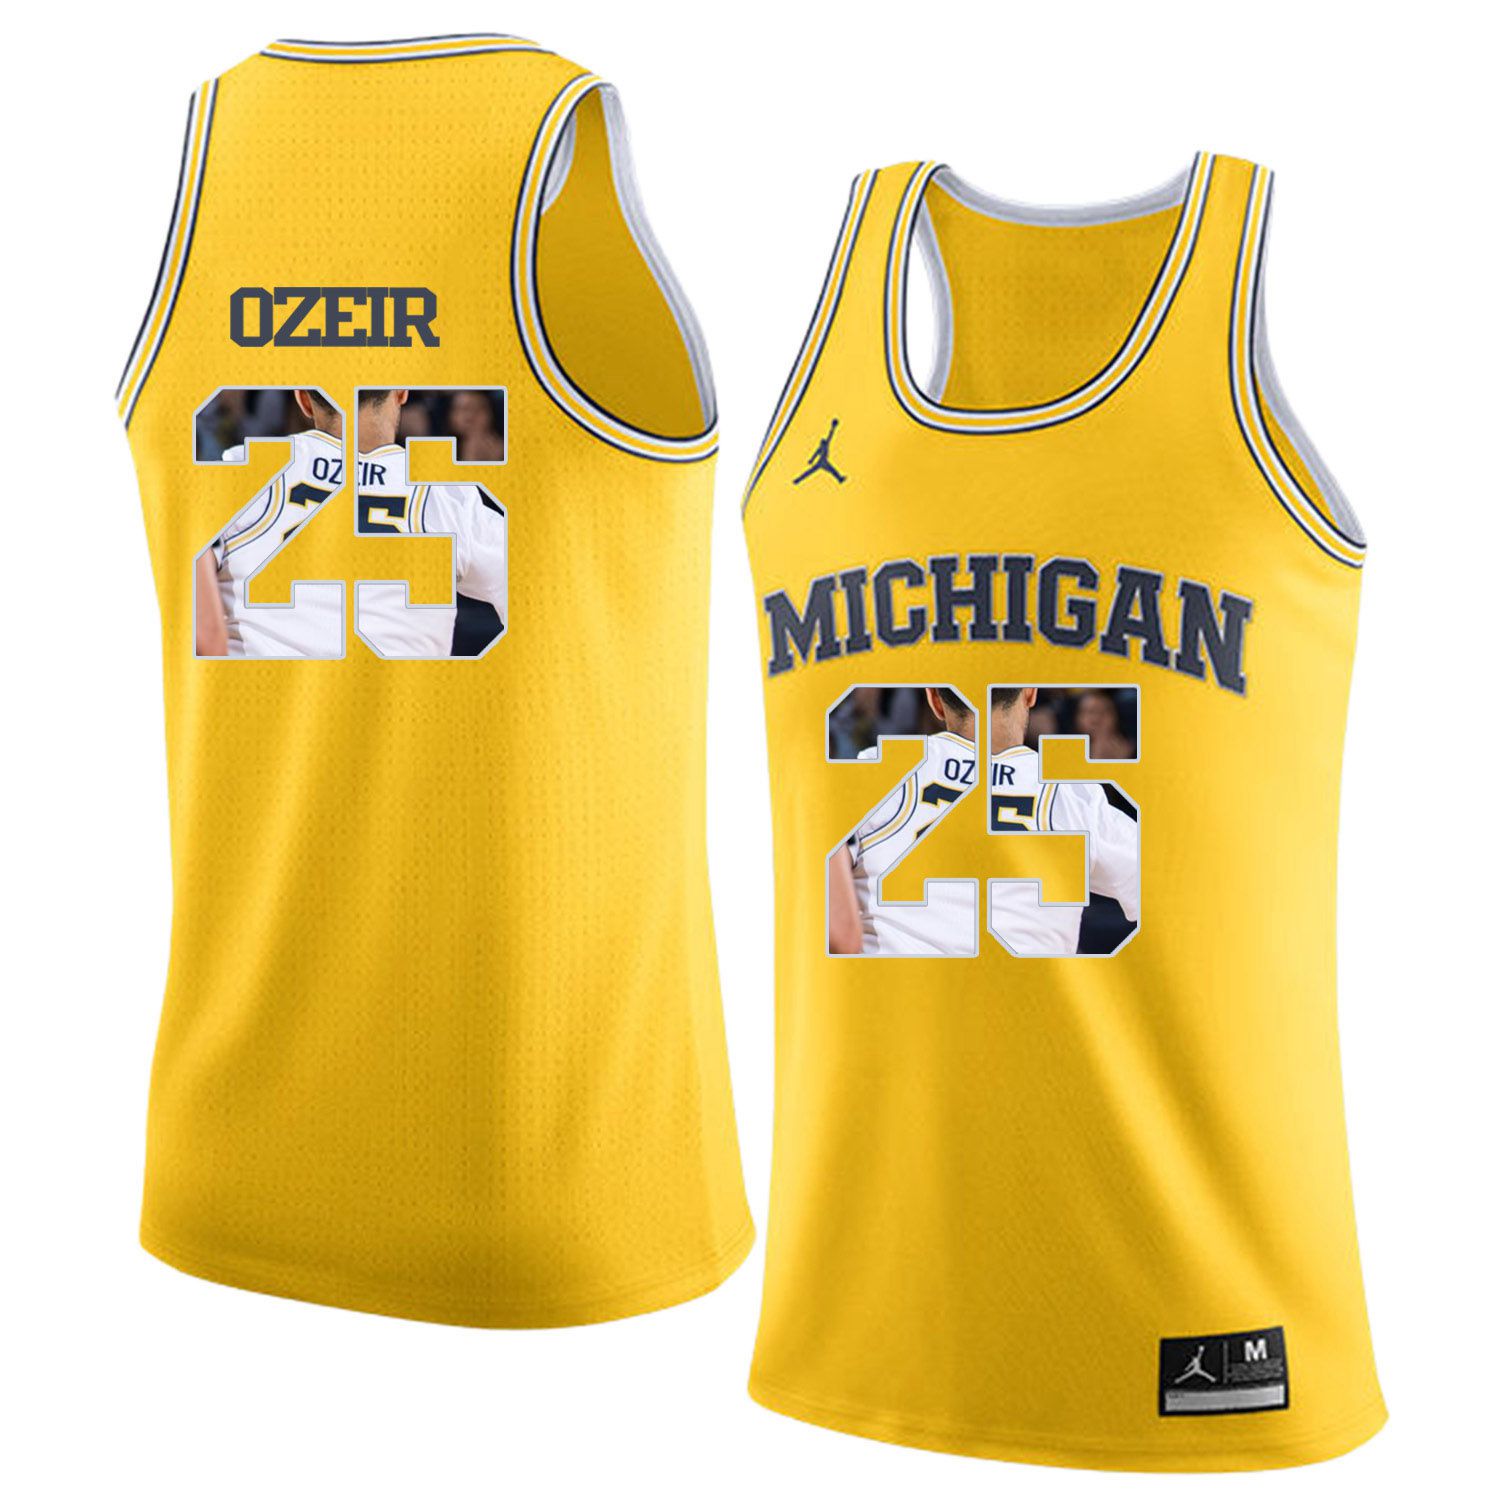 Men Jordan University of Michigan Basketball Yellow #25 Ozeir Fashion Edition Customized NCAA Jerseys